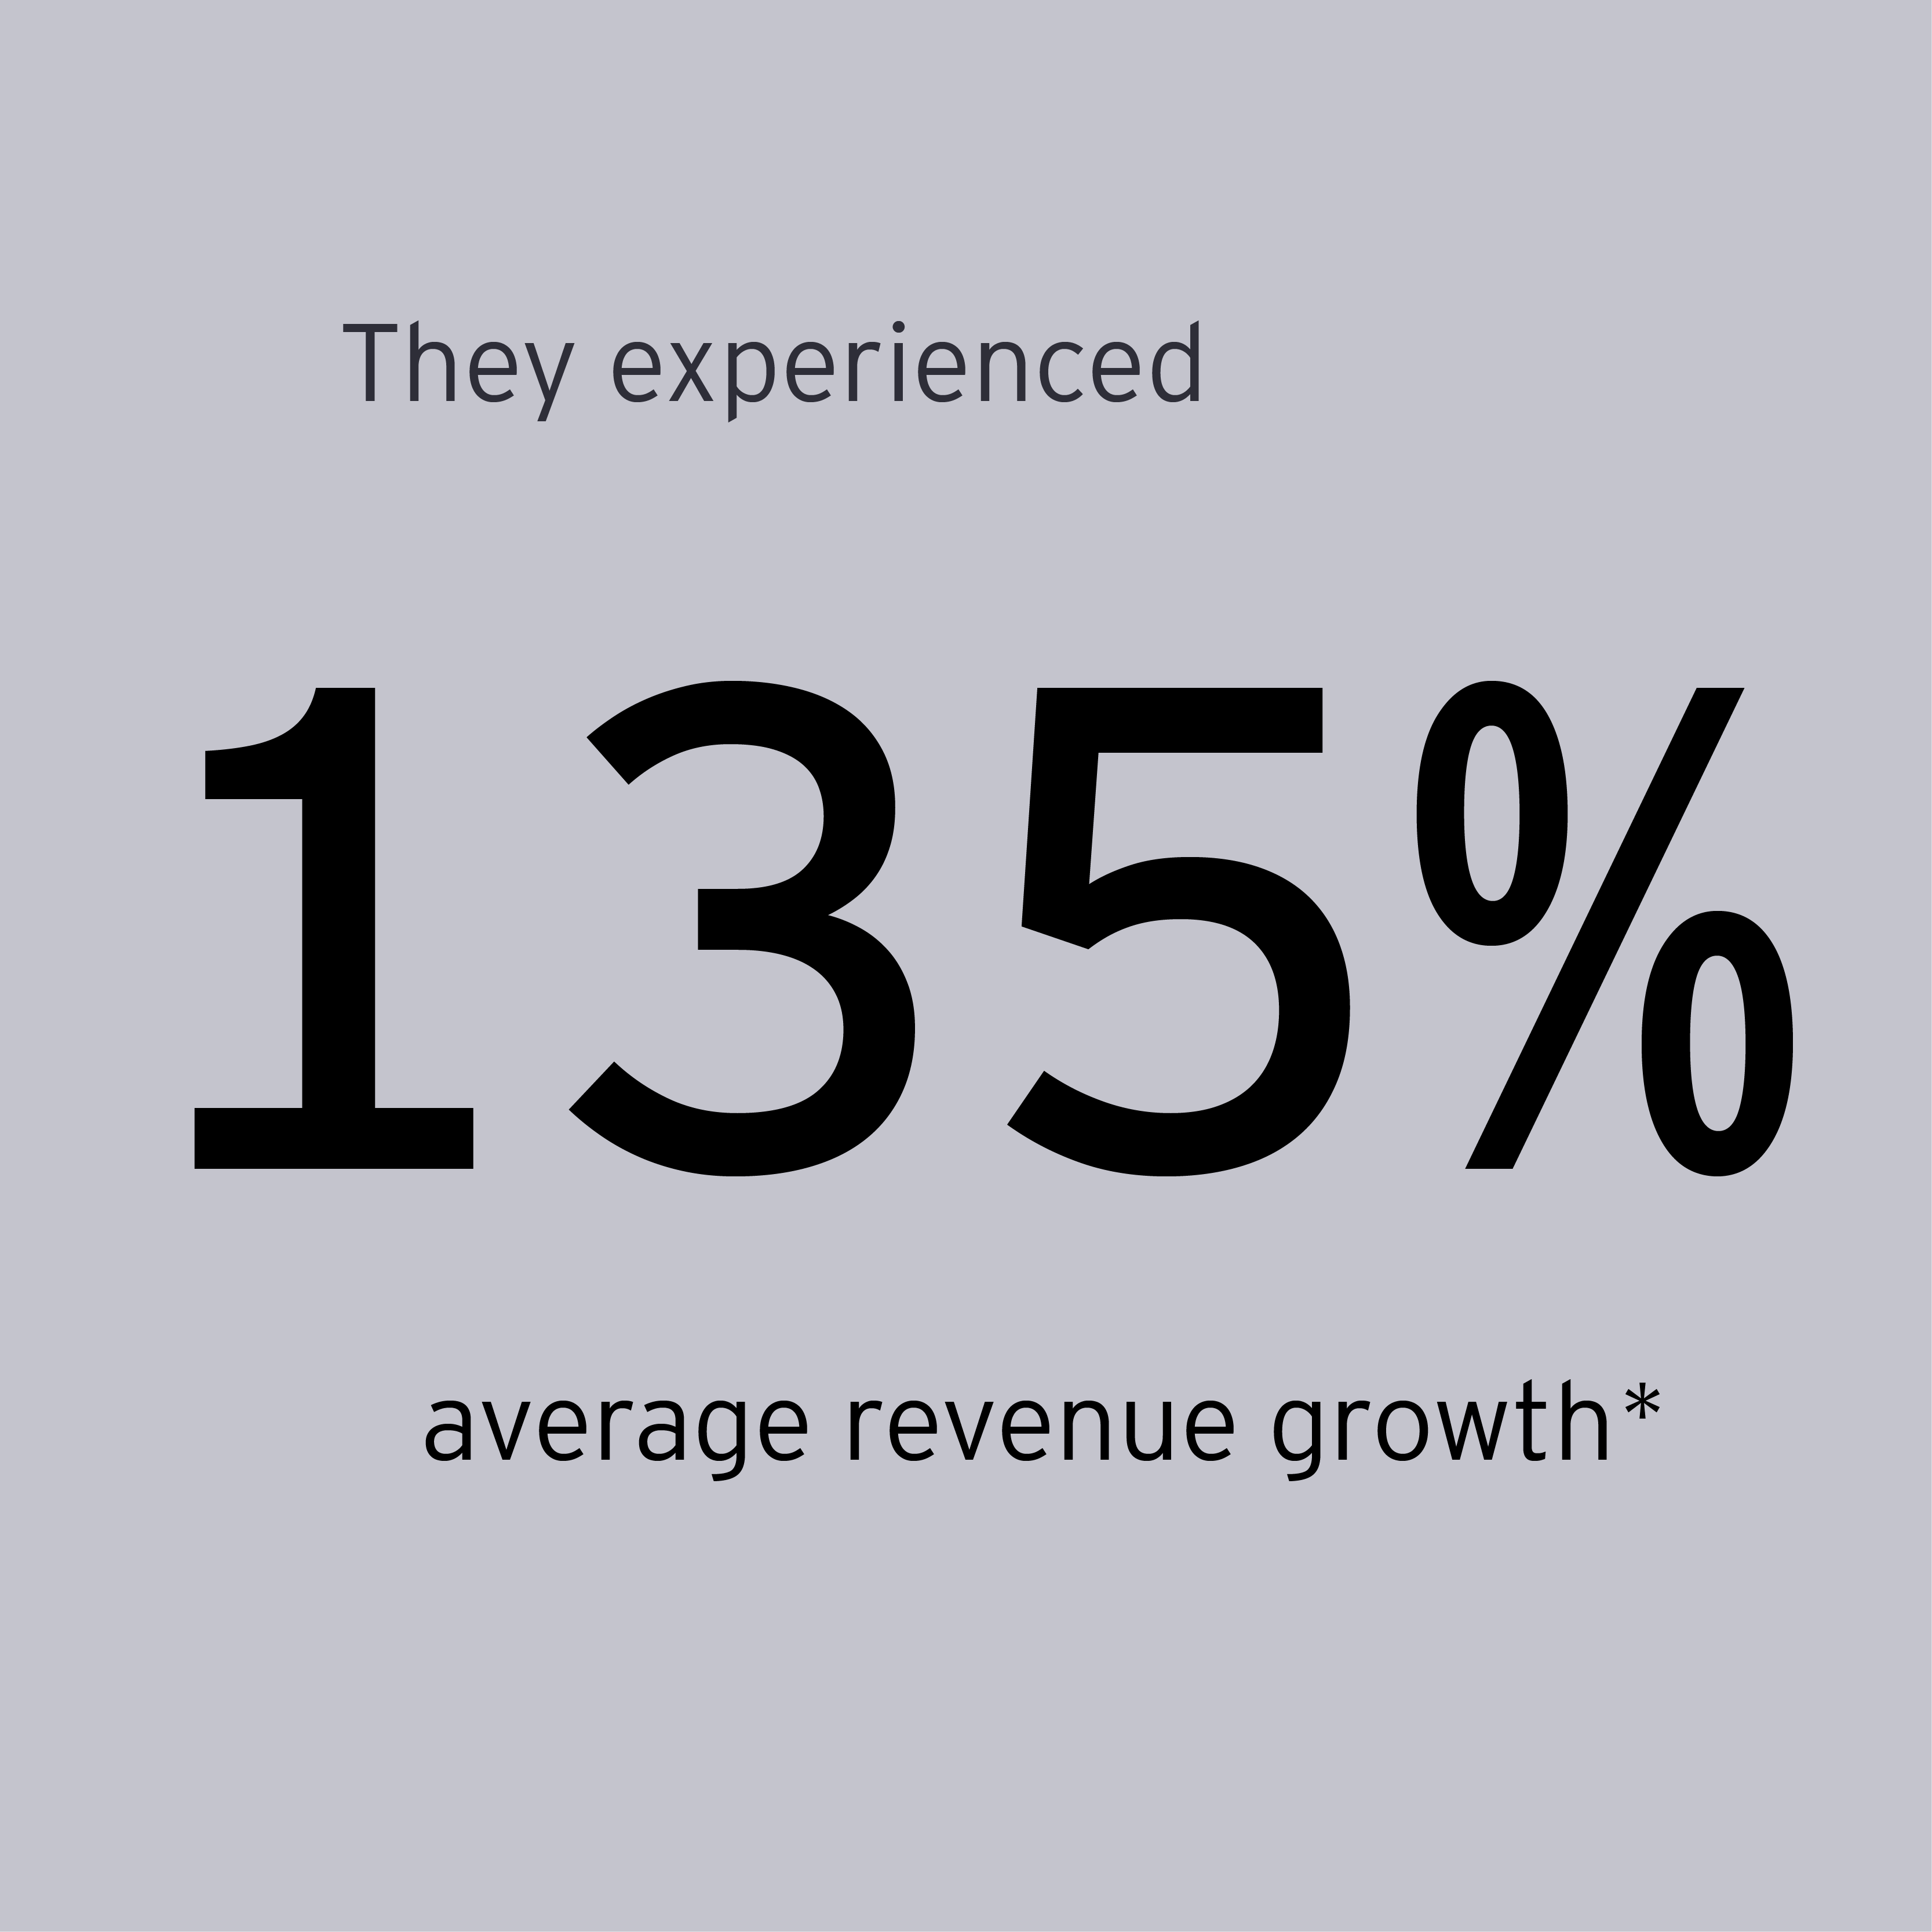 EOY winners experienced 135% average revenue growth